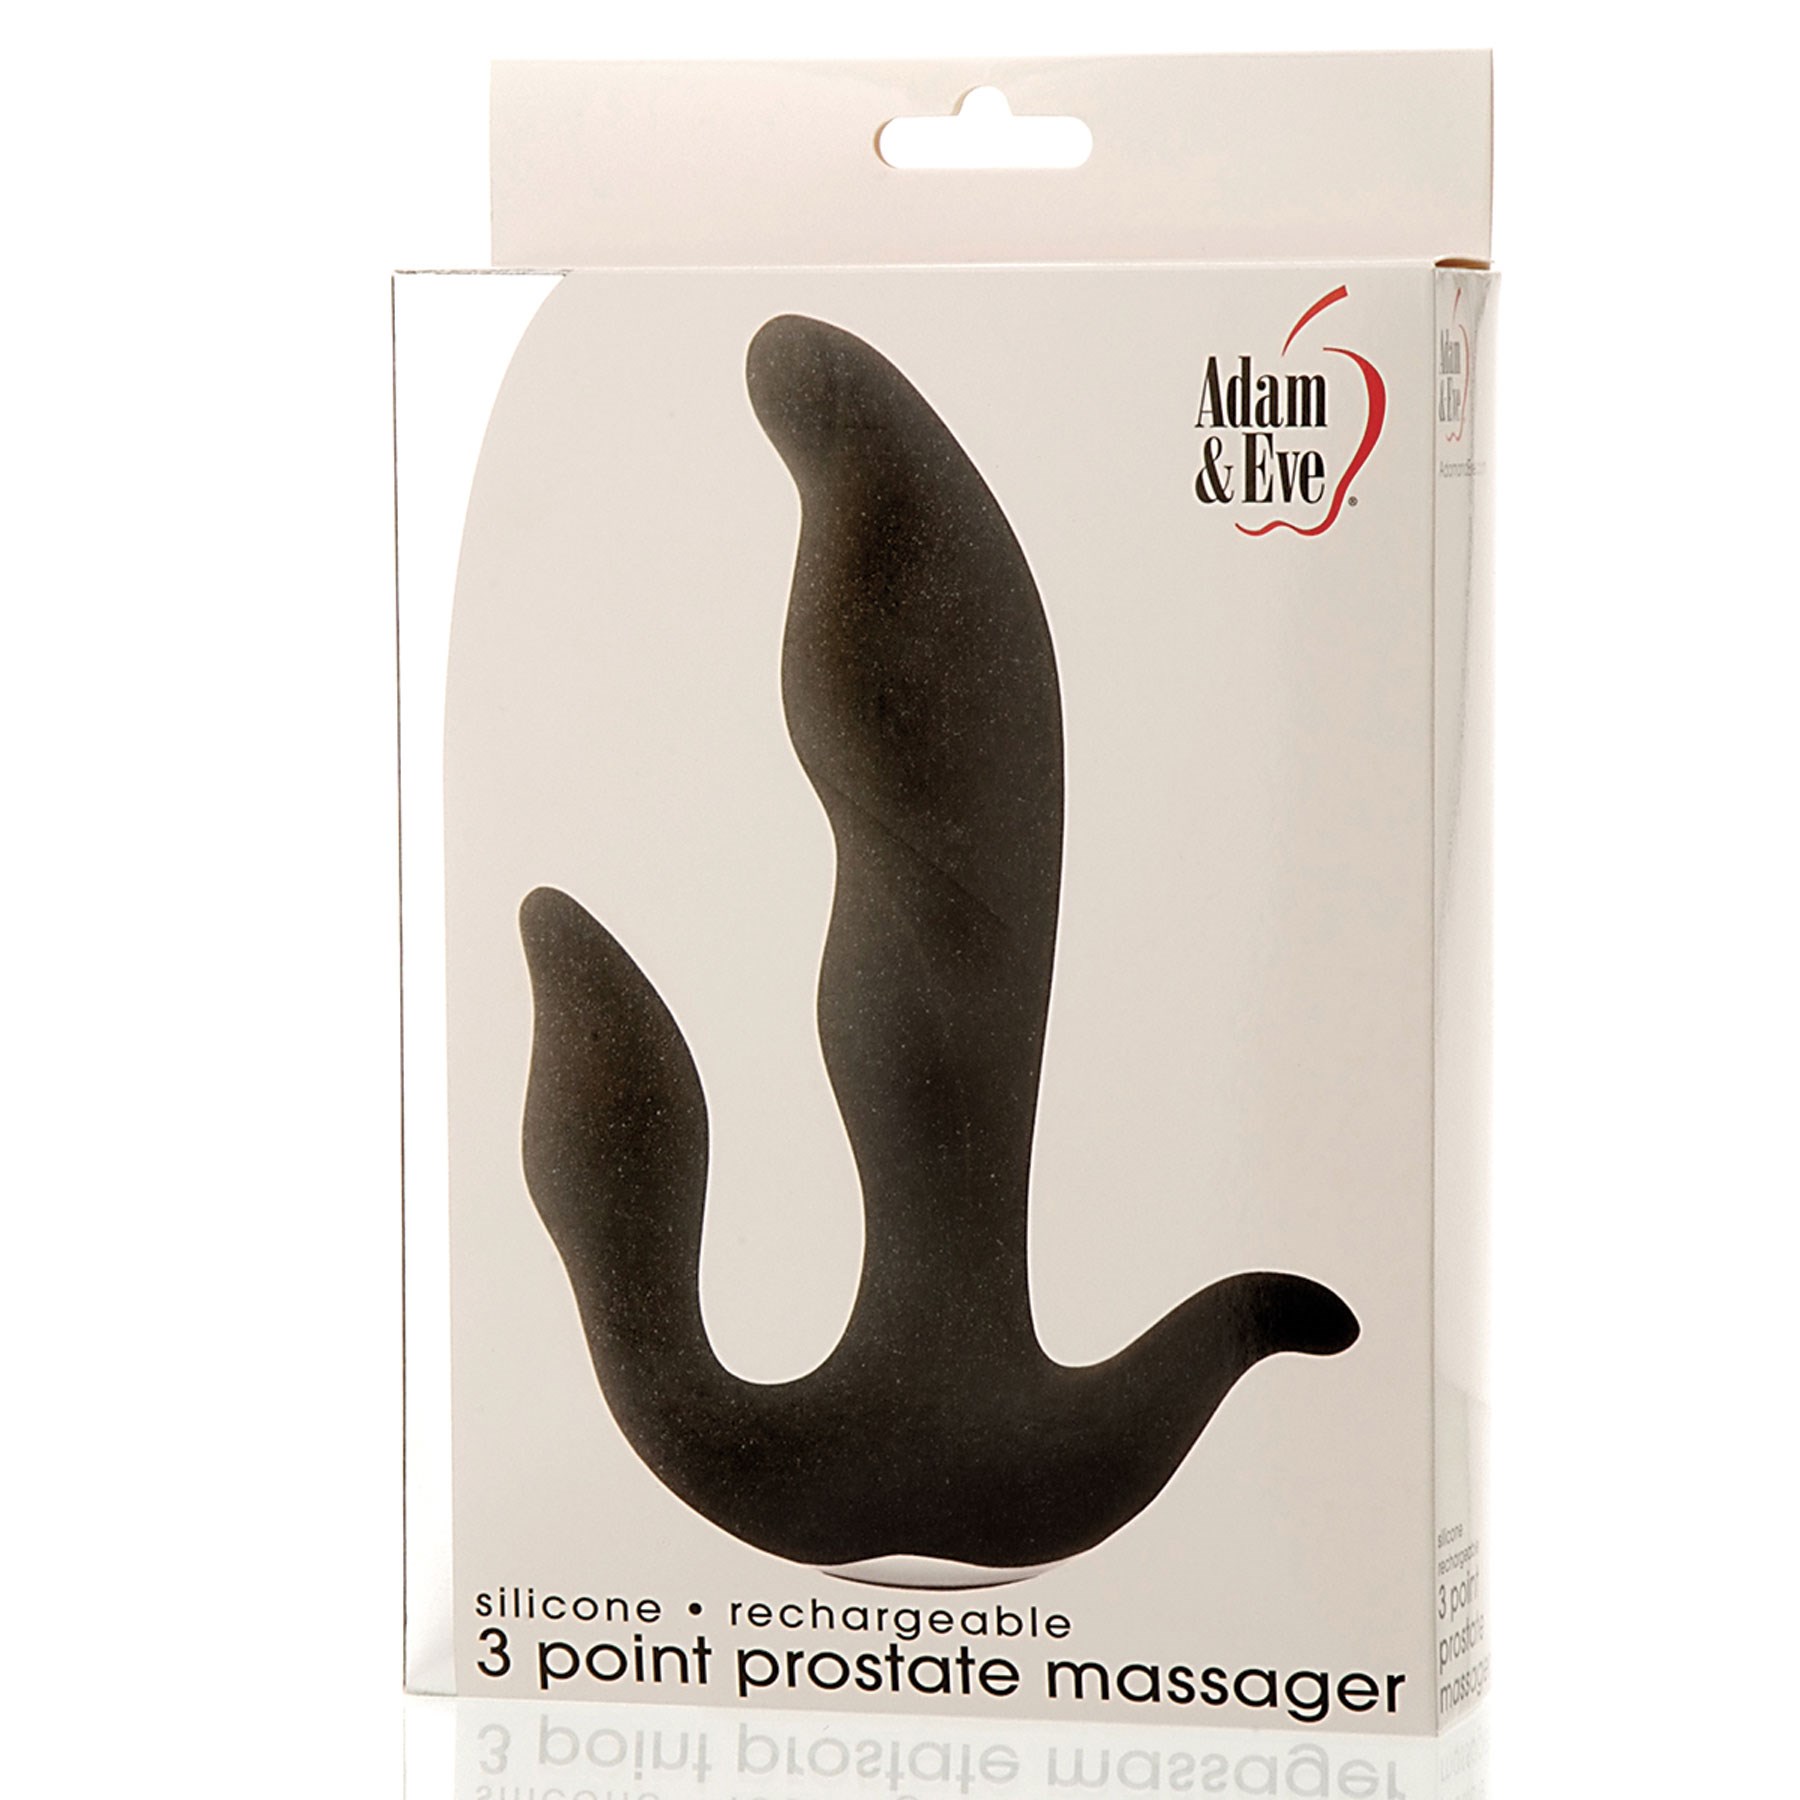 A&E 3 Point Prostate Massager box